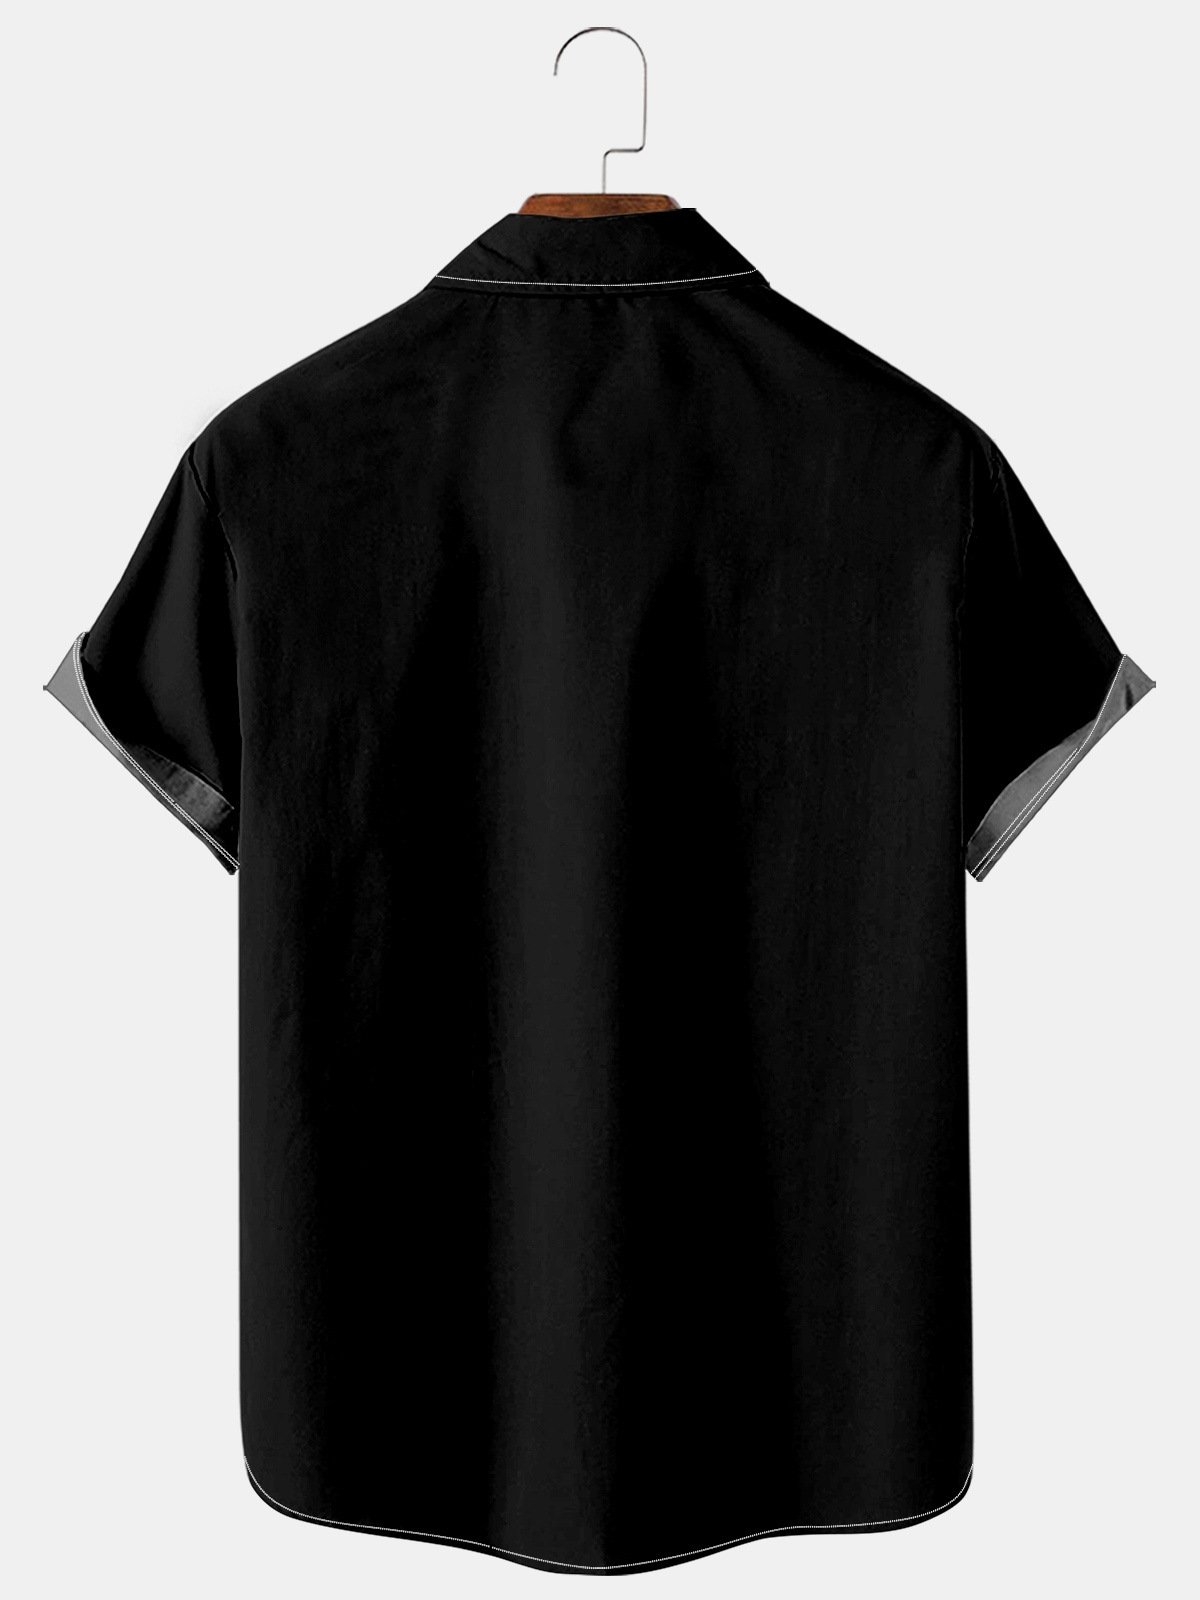 Creative Eco-Friendly Graphic Men's Casual Short Sleeve Shirt